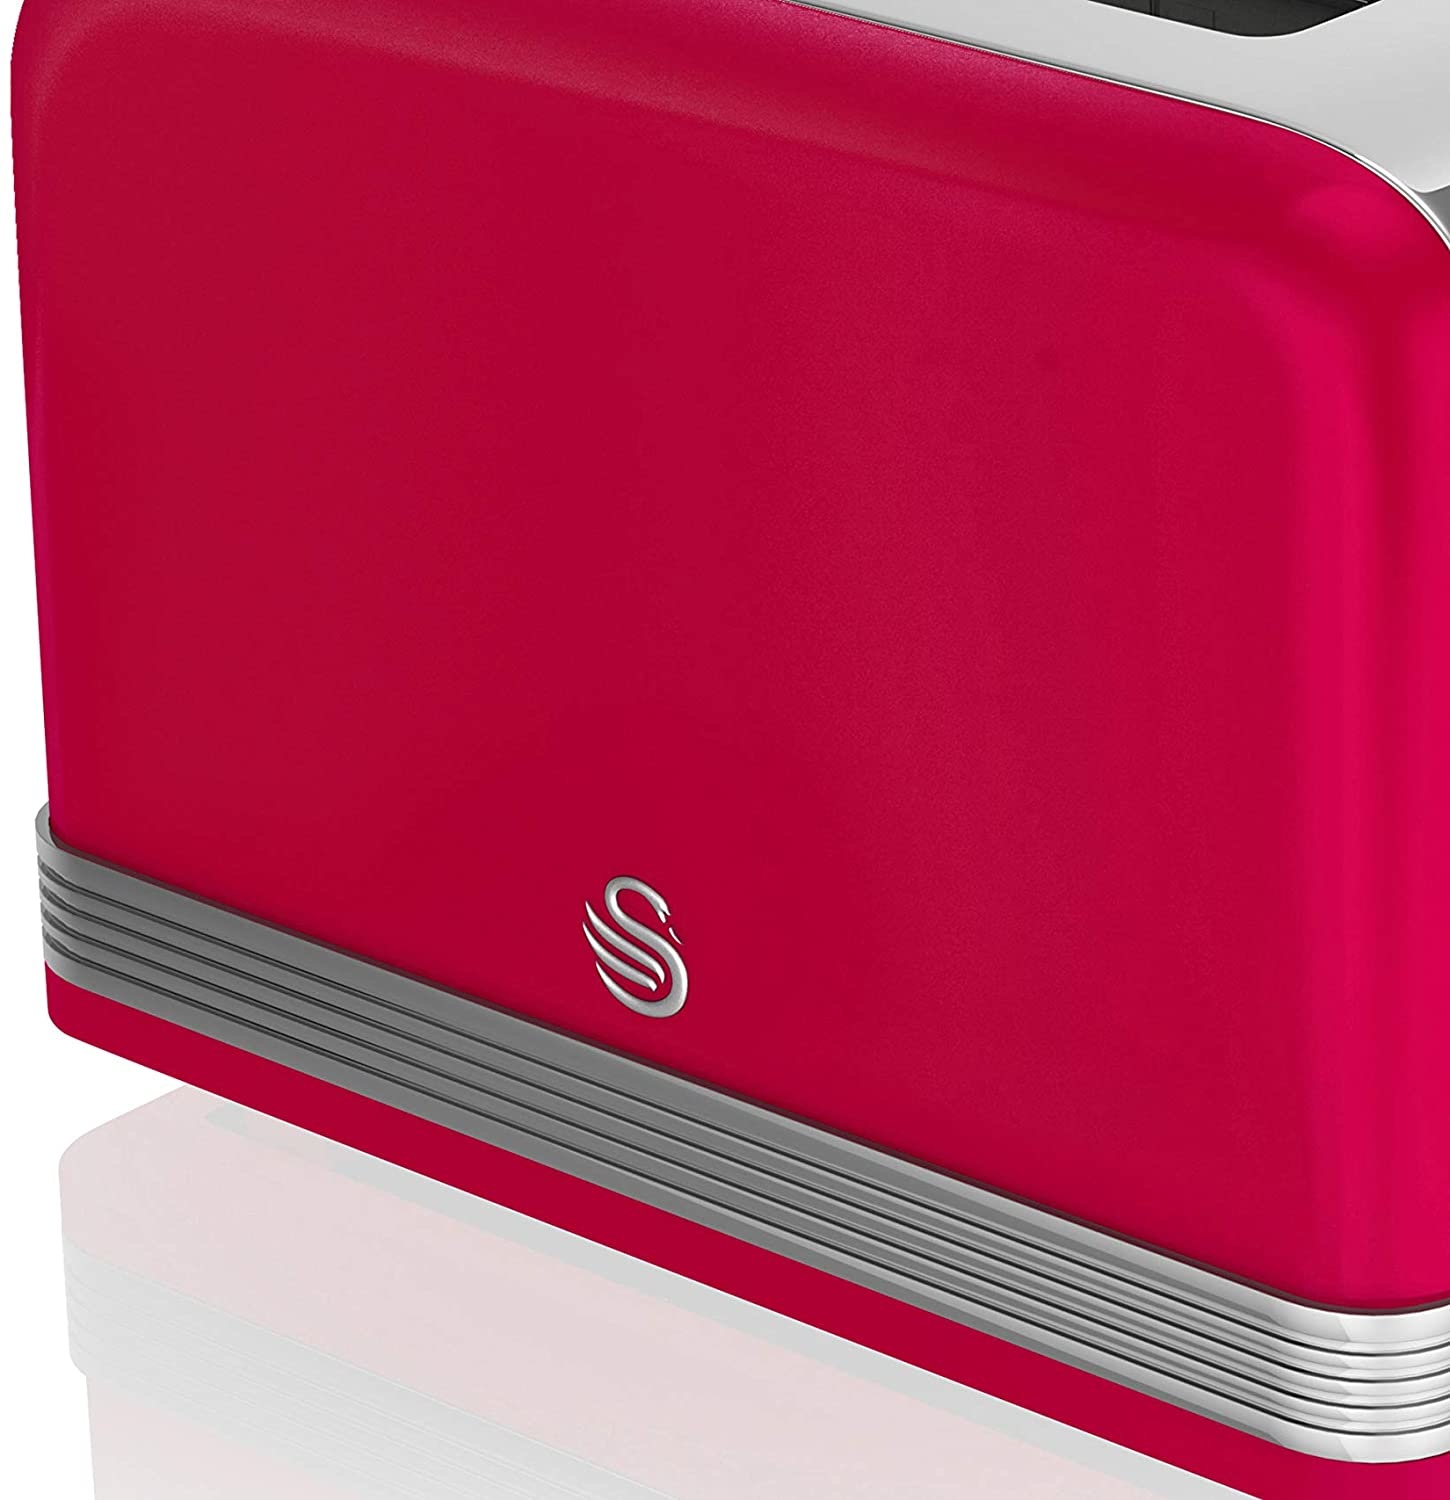 https://cdn.shoplightspeed.com/shops/610486/files/40928648/salton-salton-swan-retro-4-slice-toaster-red.jpg